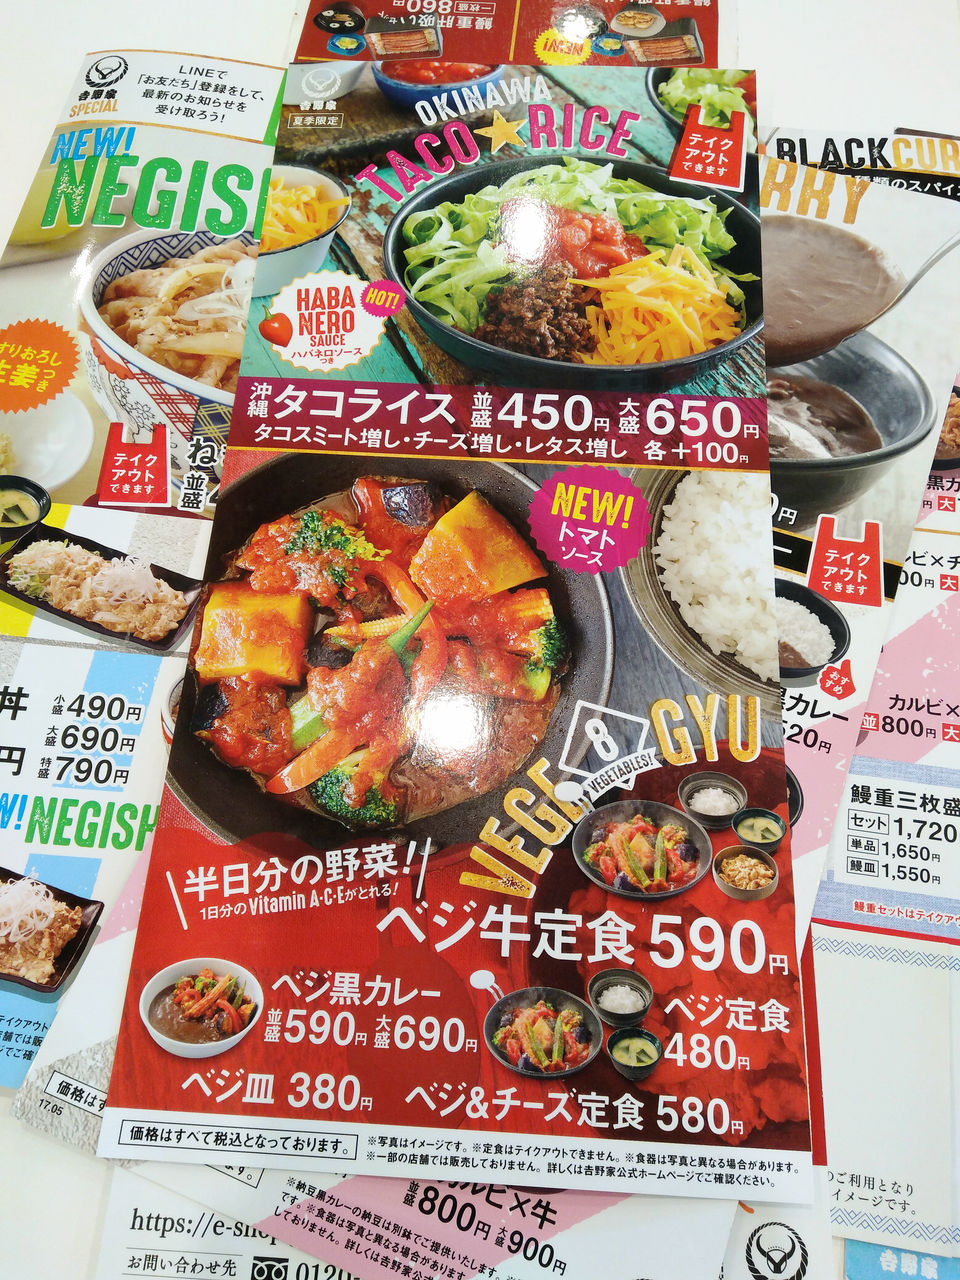 Okinawa Taco Rice japanese Kitchen Japan Foodie Tote Bag